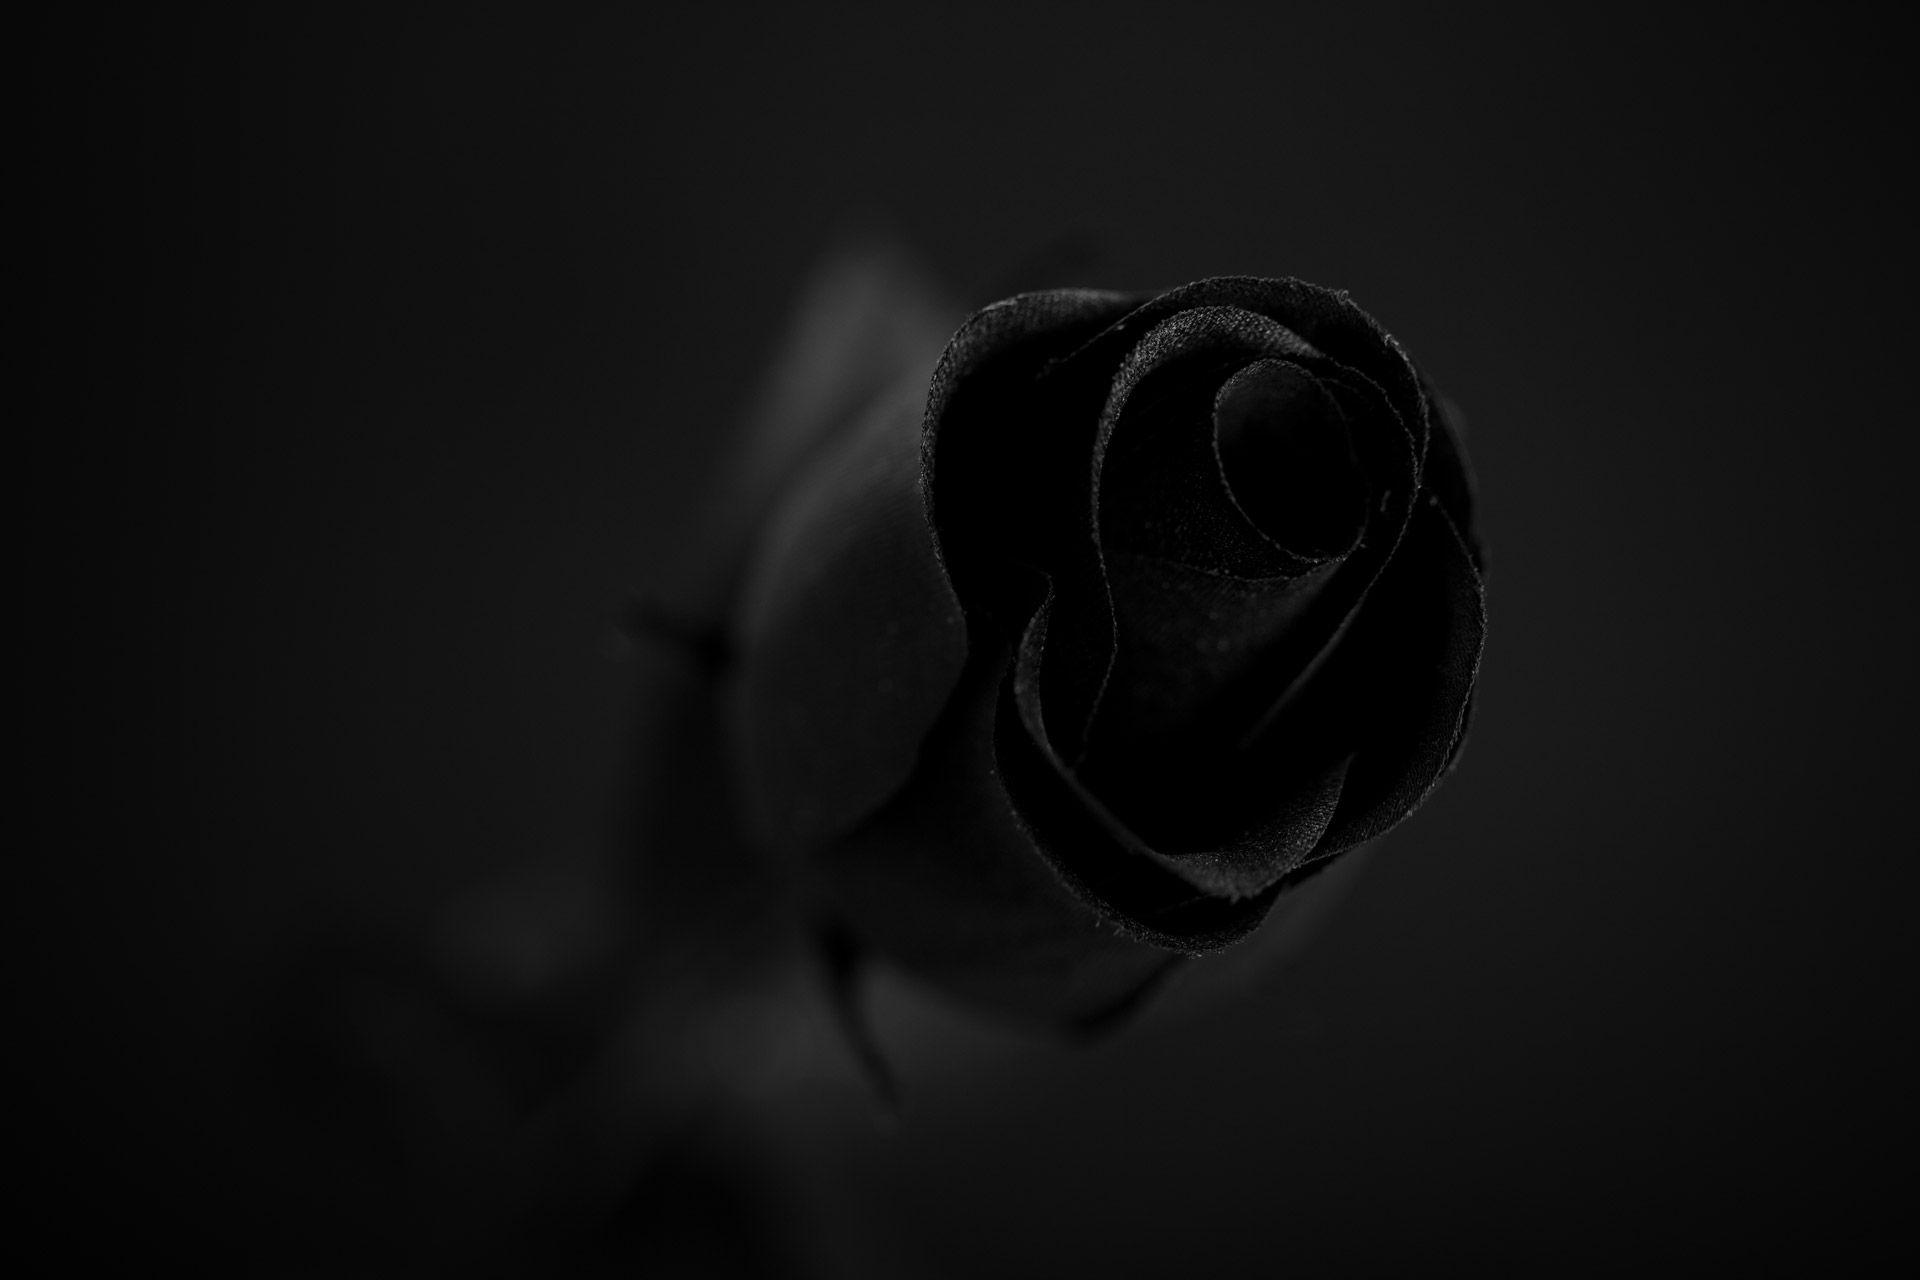 Black Rose Wallpaper 1